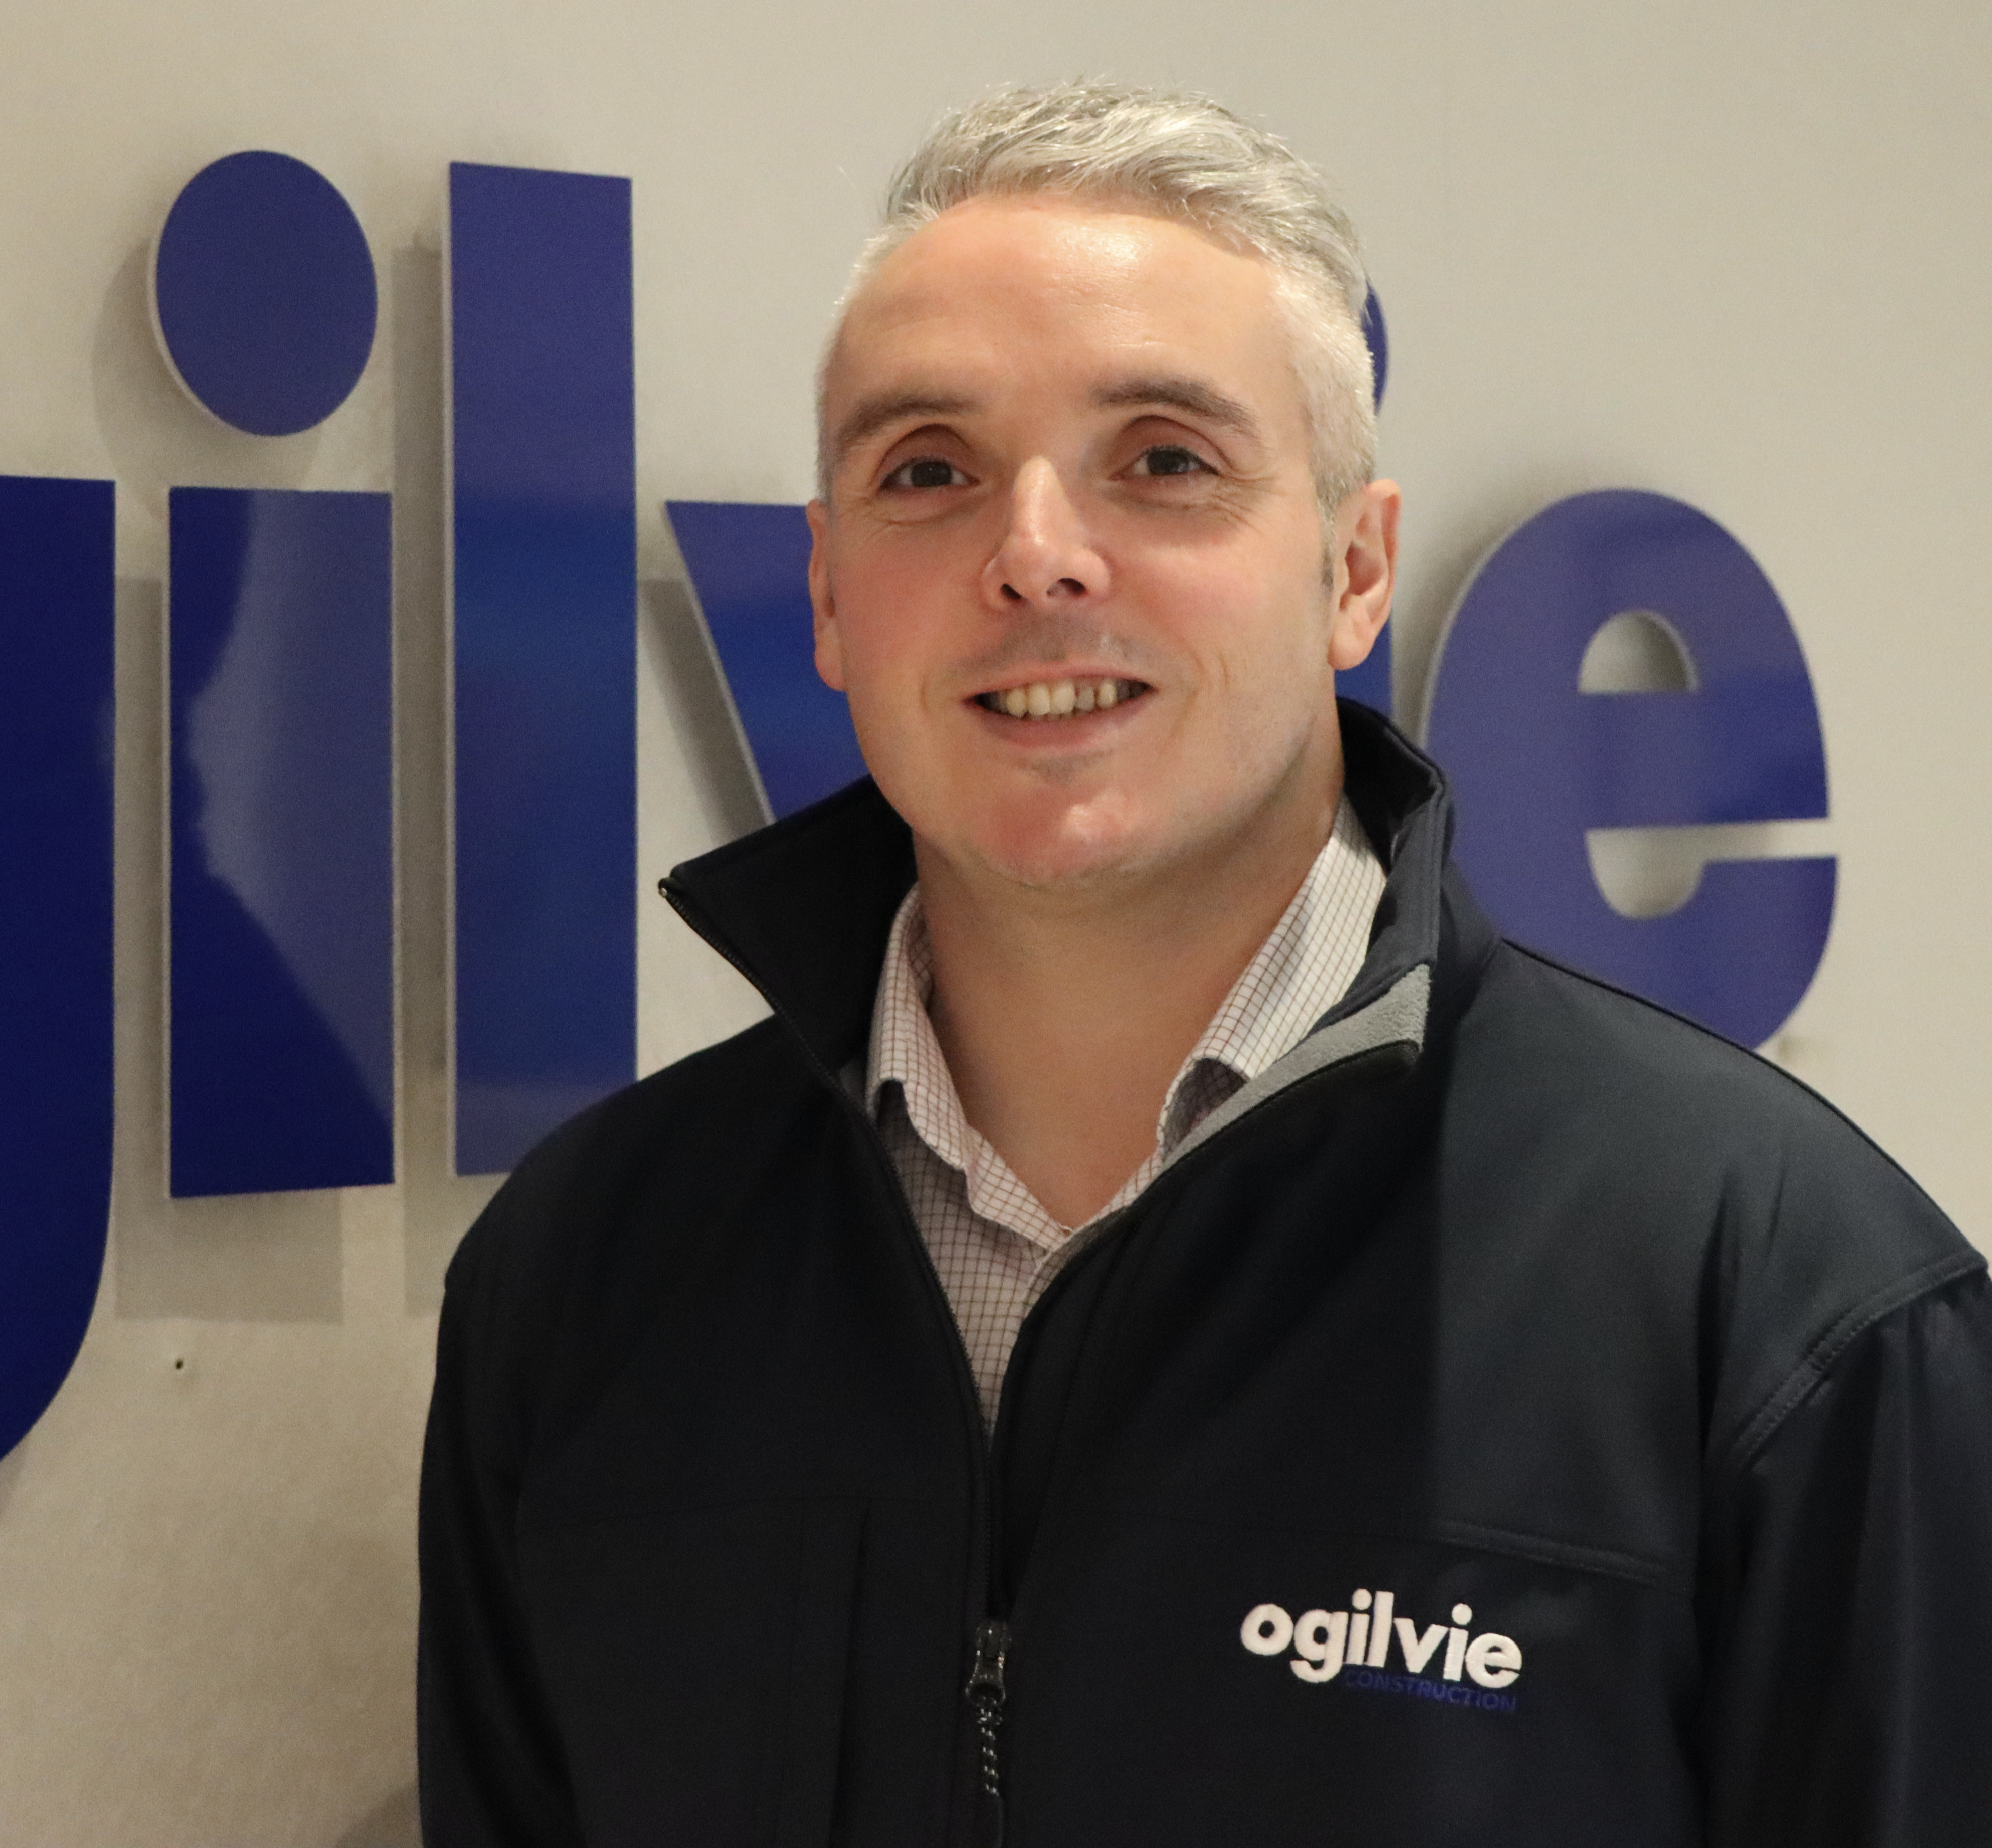 Ogilvie Construction brings Martin Poole into senior team